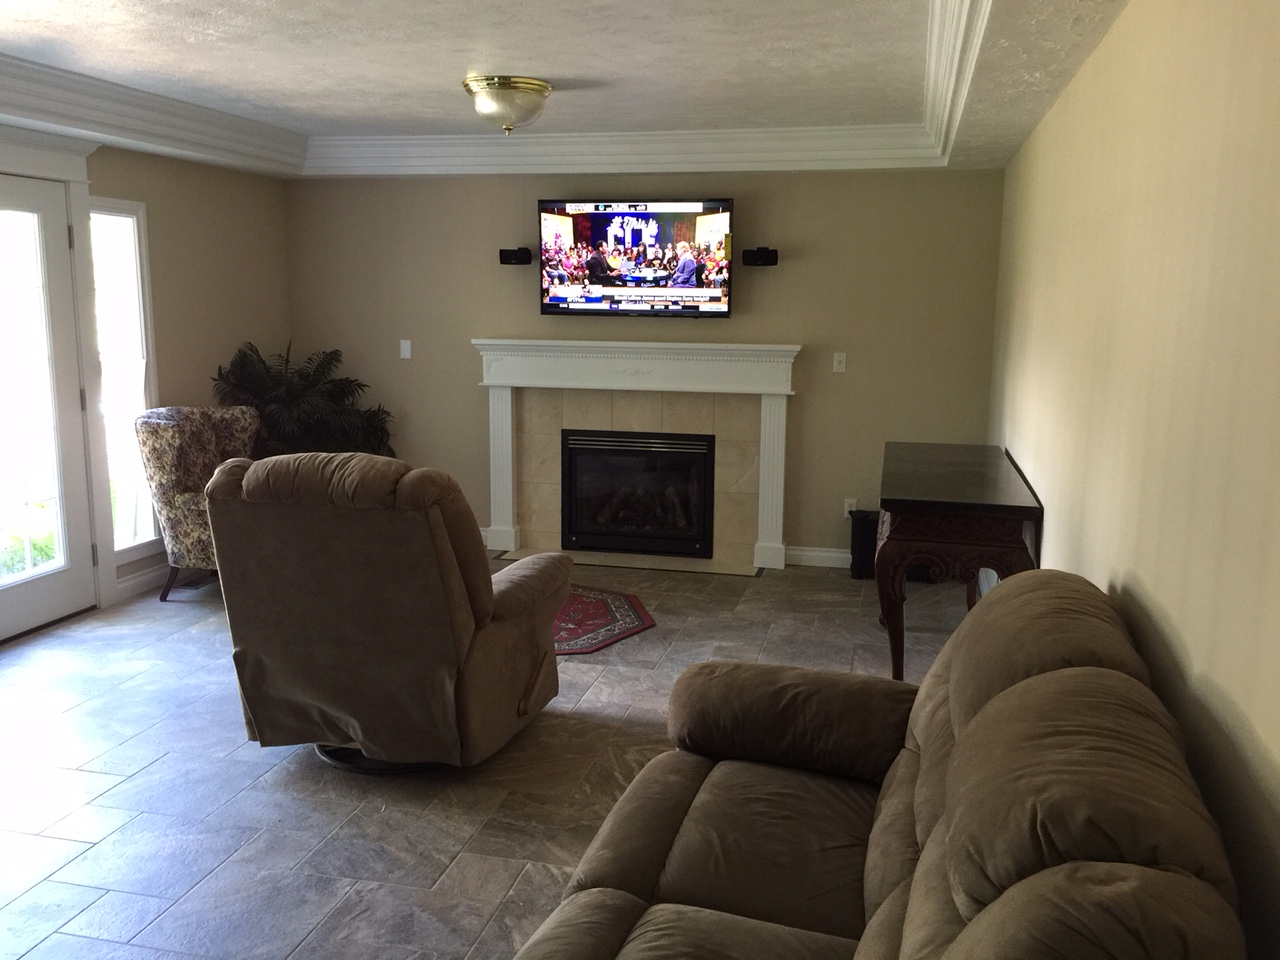 living-room-flat-screen-TV